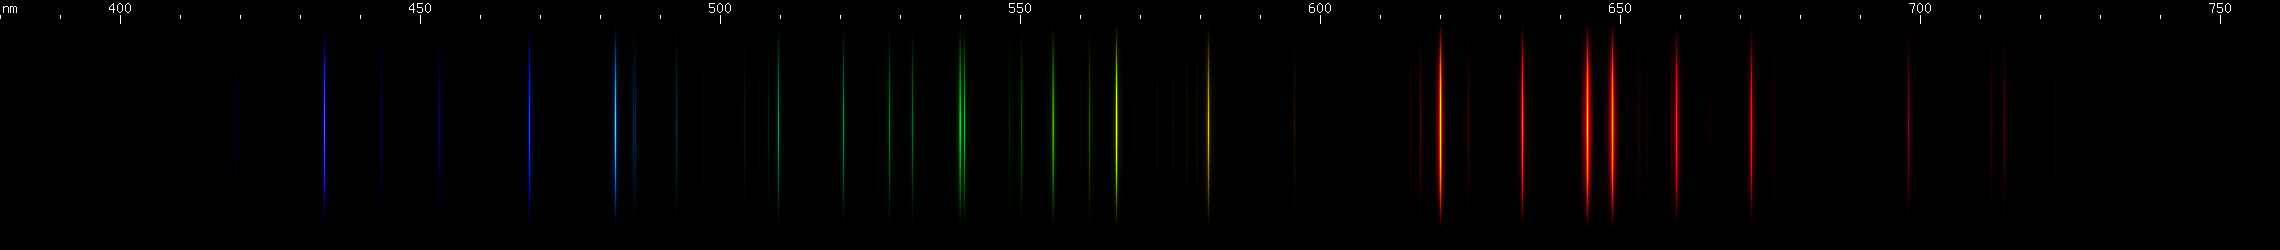 Spectral lines of Radium.